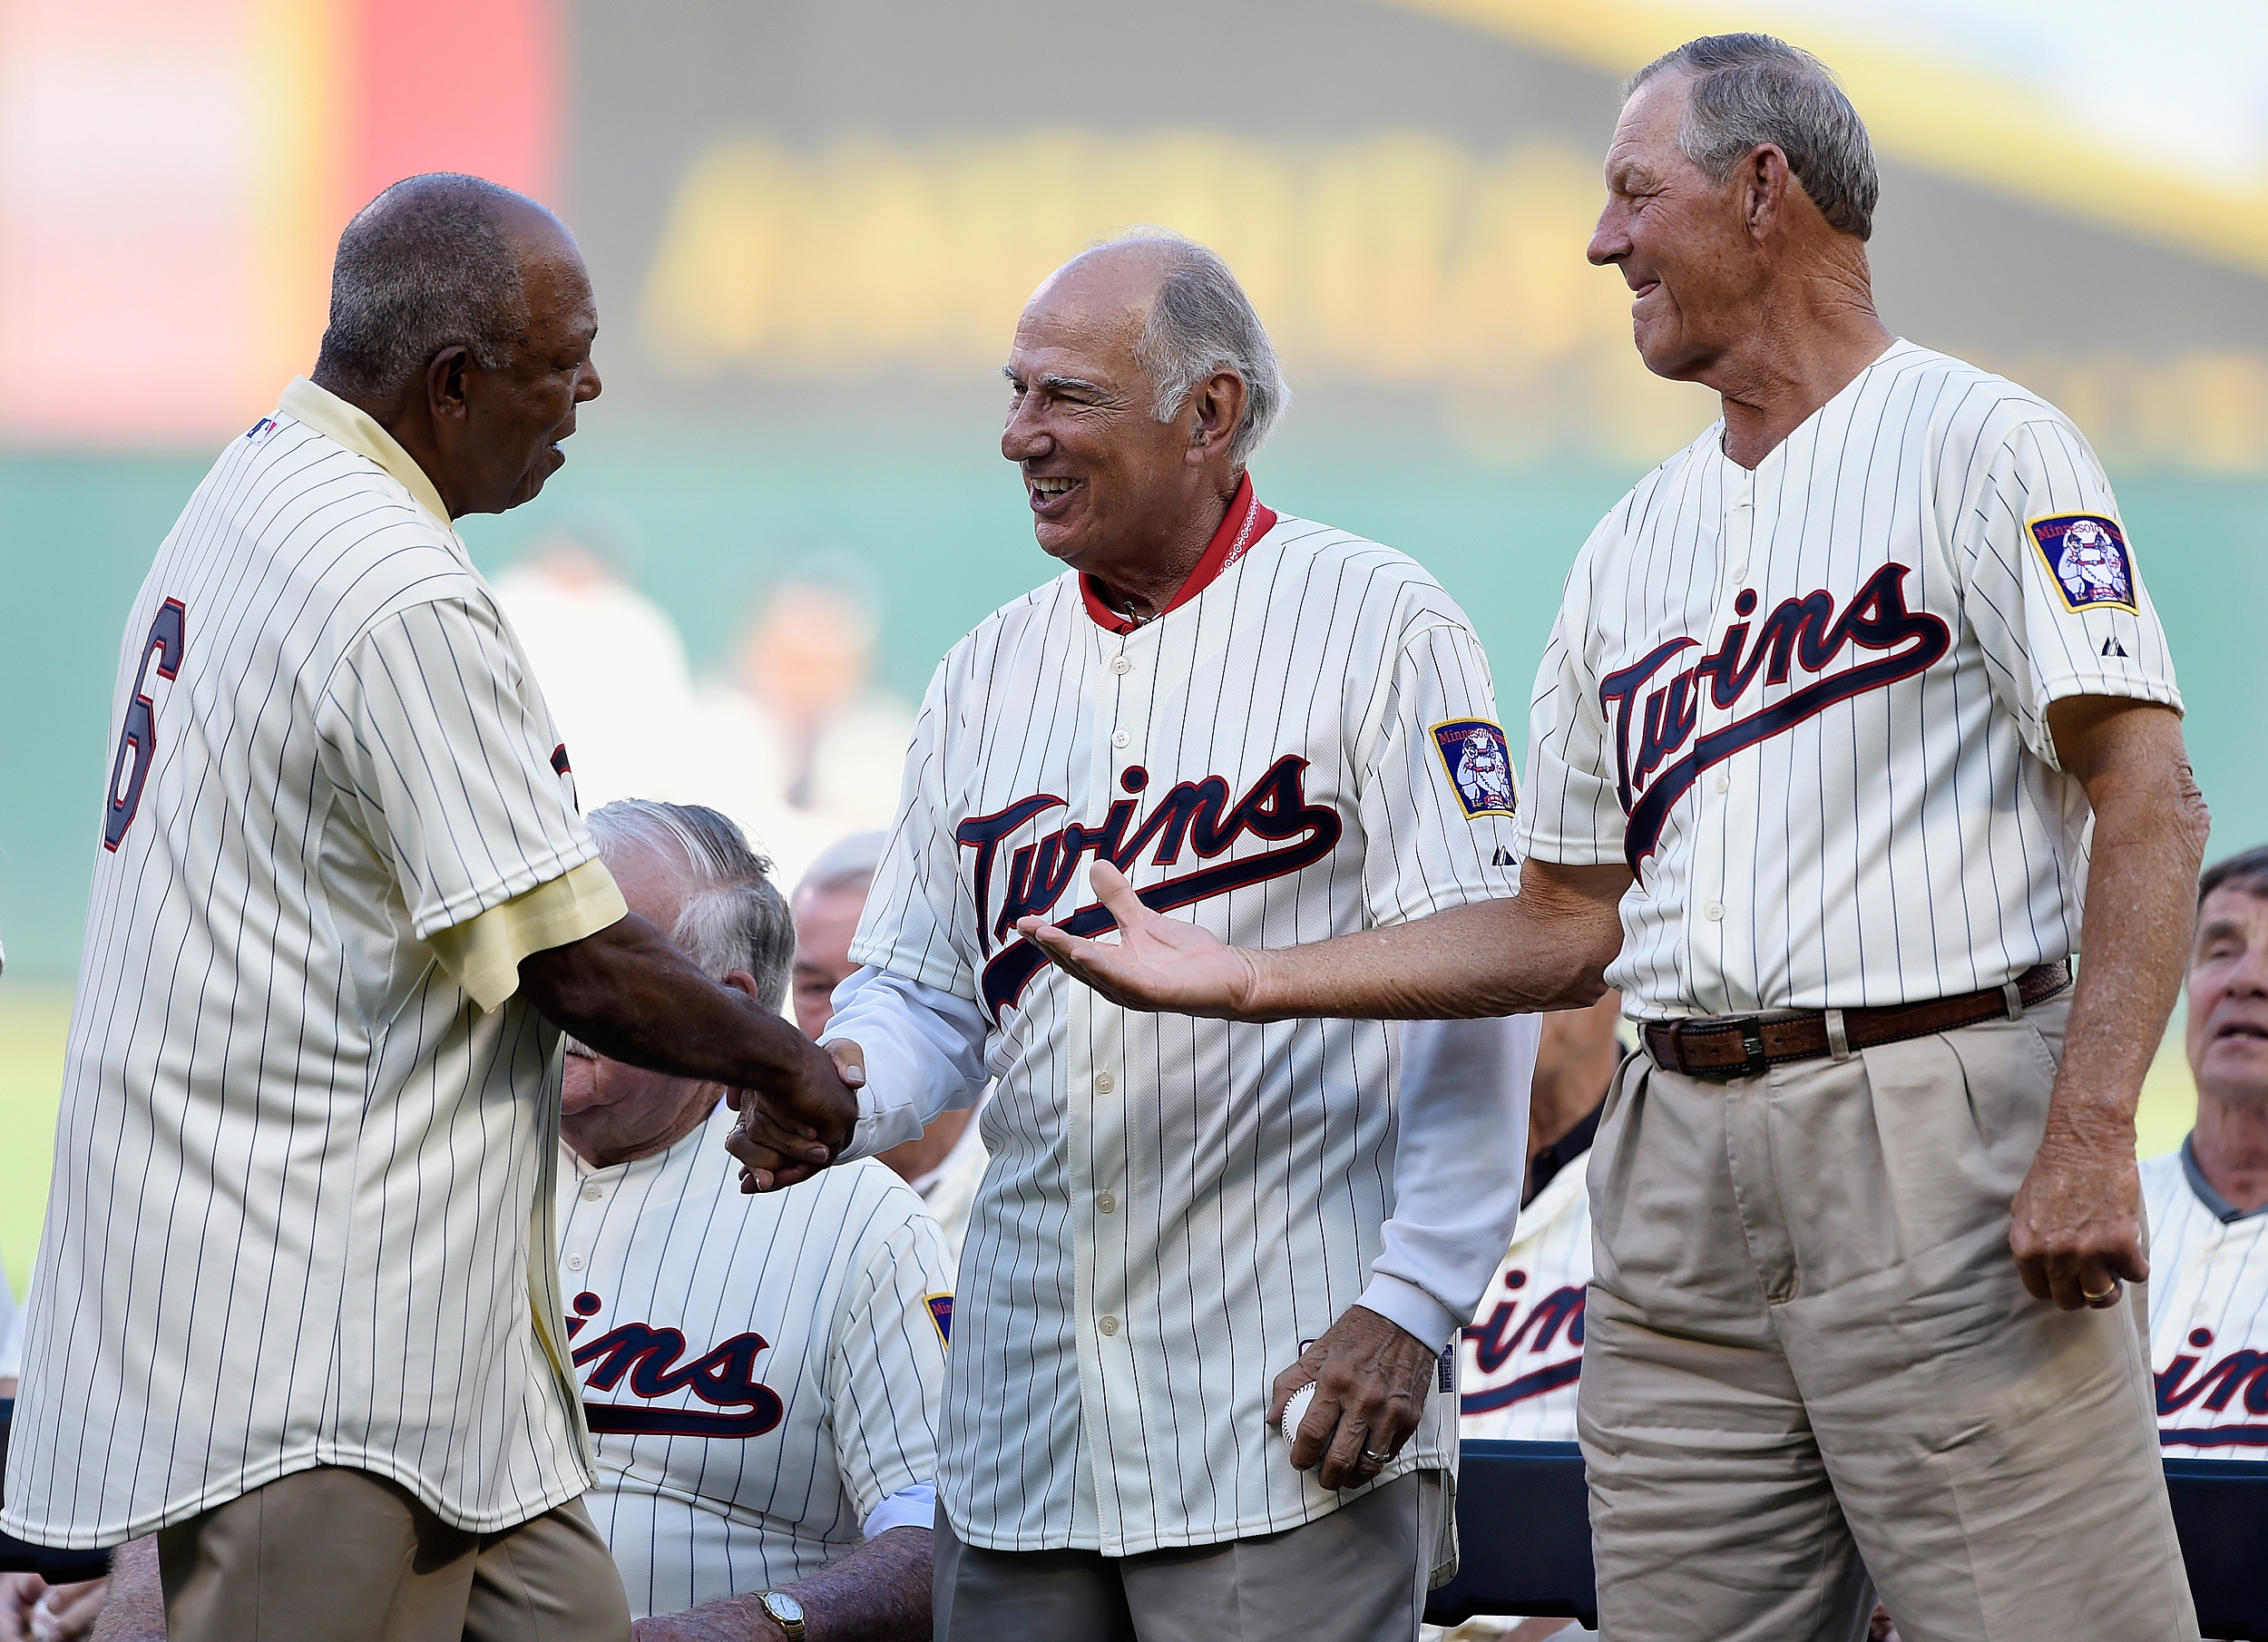 Tony Oliva: The Life and Times of a Minnesota Twins Legend [Book]